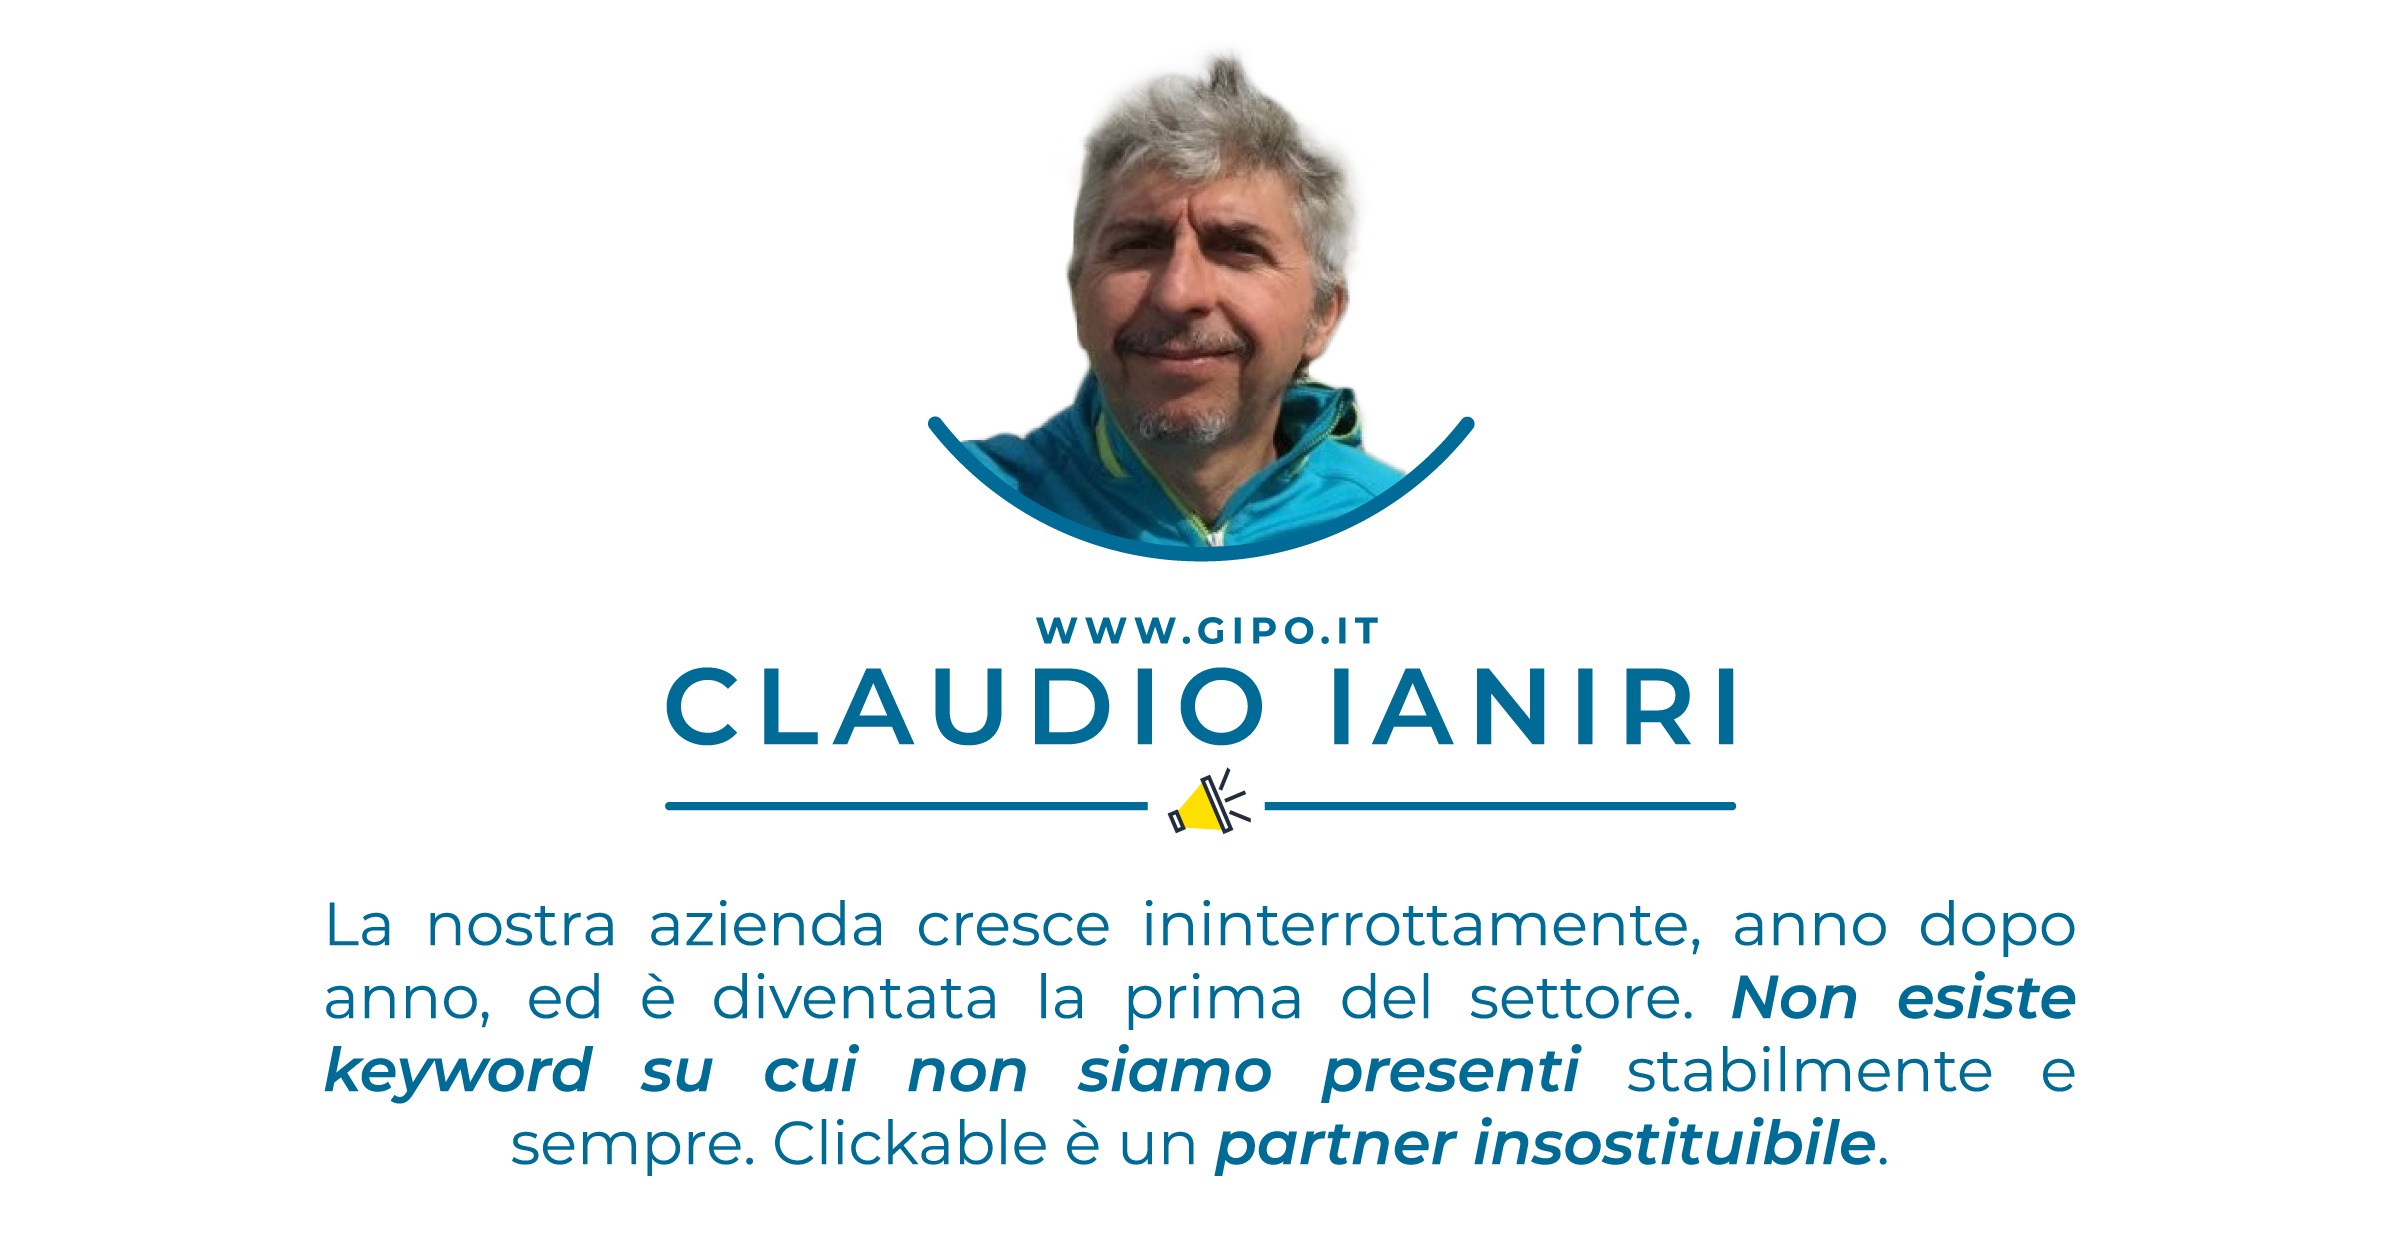 Testimonianza Claudio Ianiri - Gipo